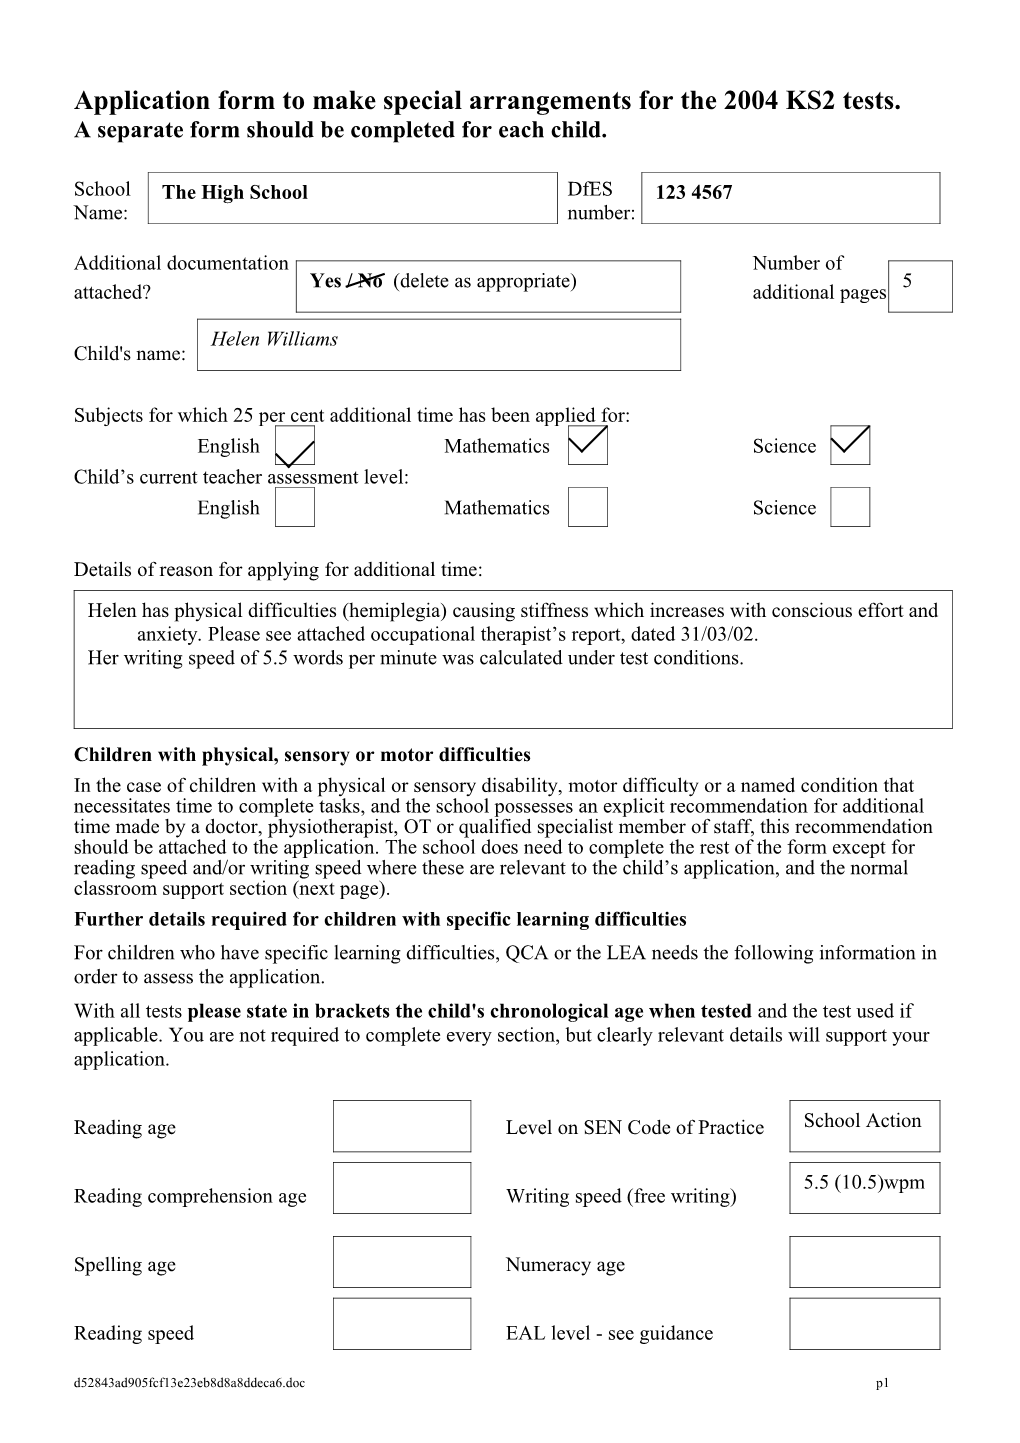 Application Form to Make Special Arrangements for the 2003 KS2 Tests